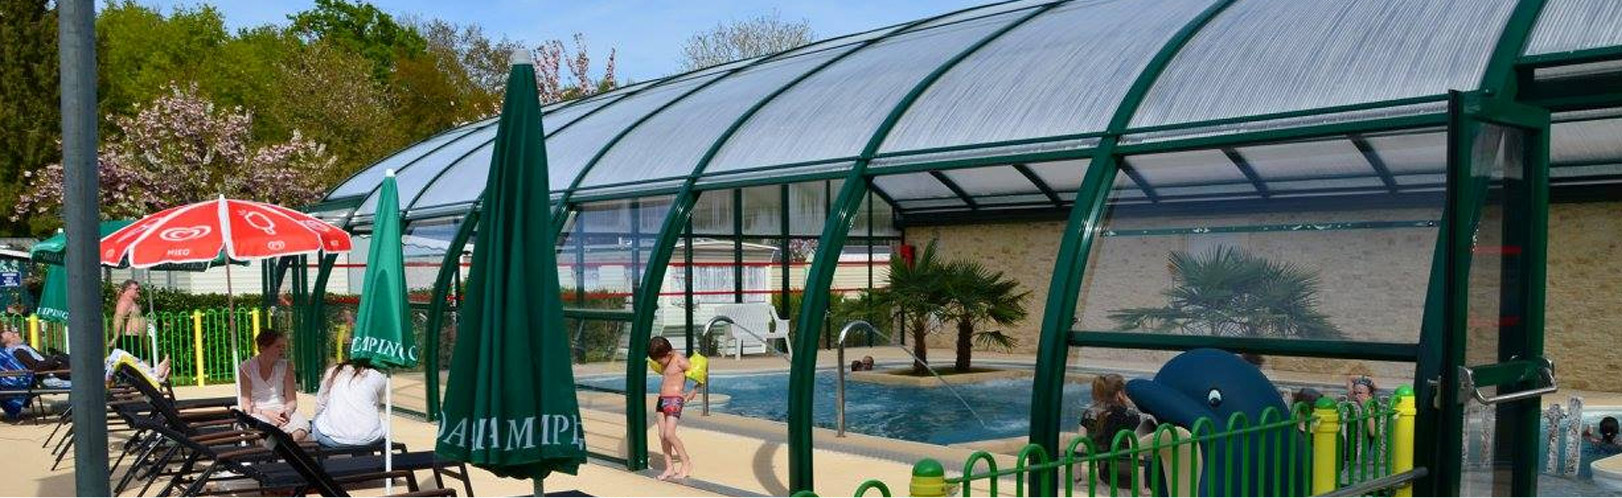 Campsite with swimming pool near Paris